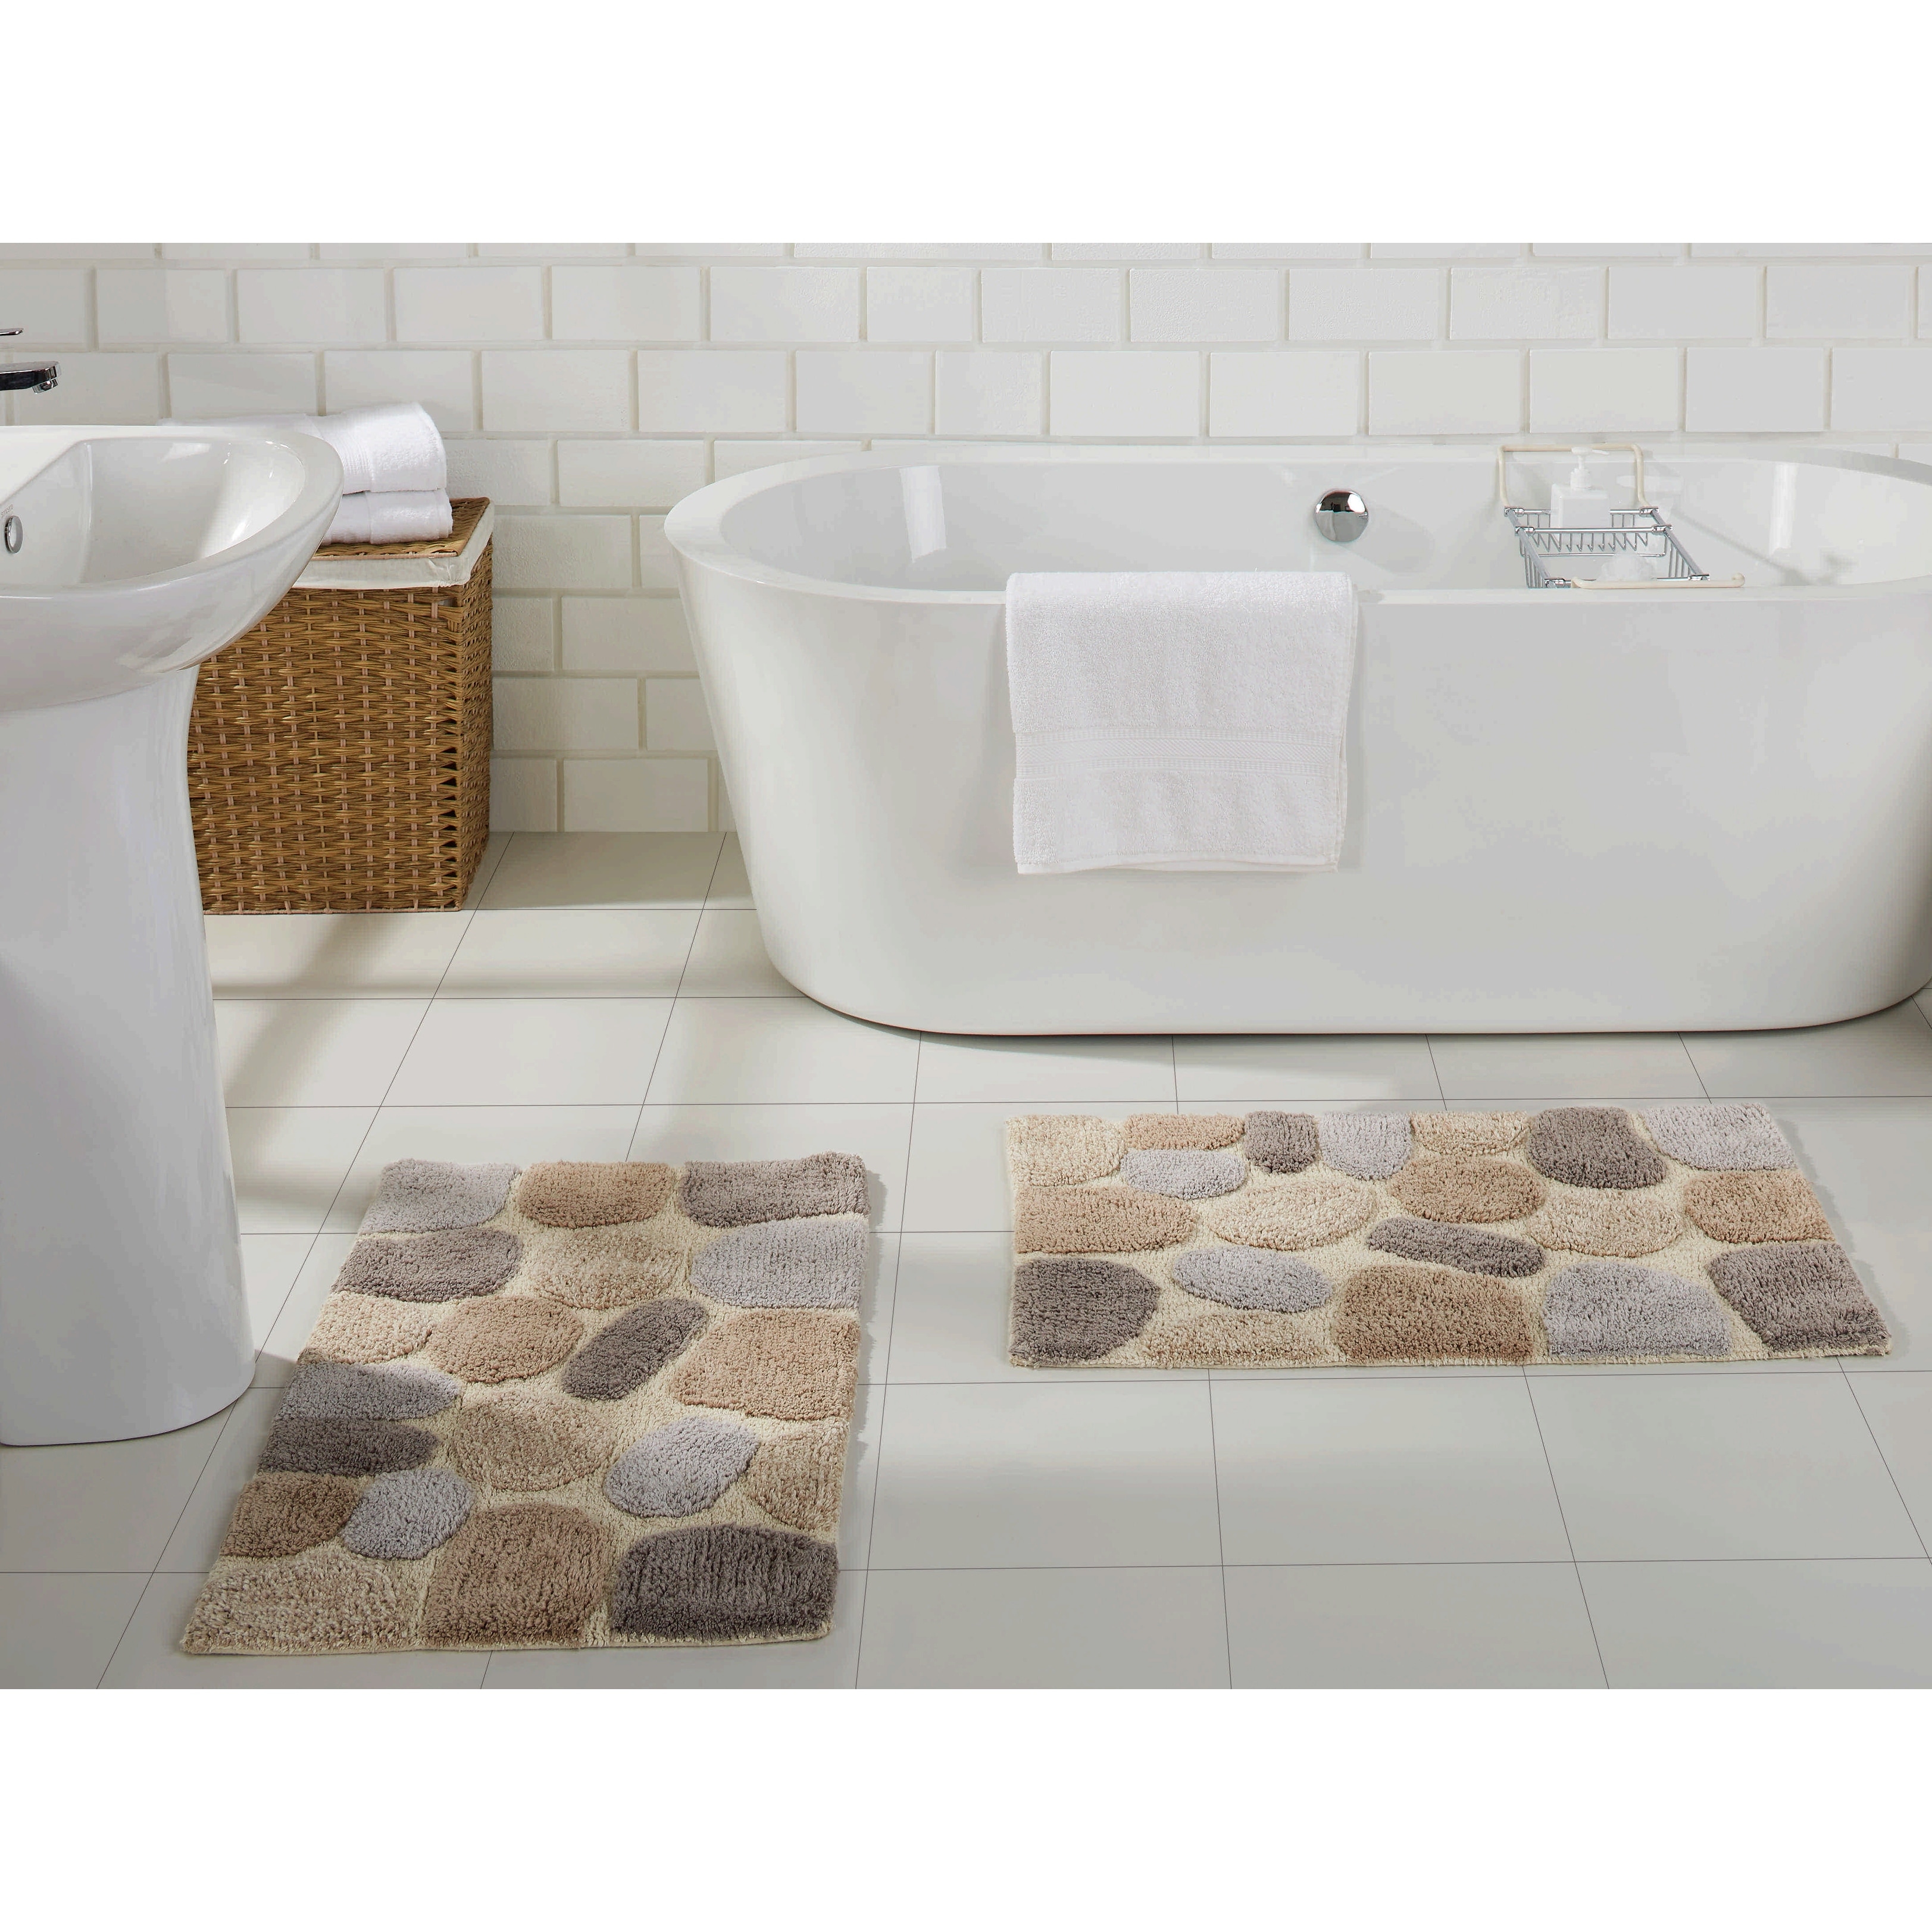 Bathroom Rugs Set 2 Piece - Bed Bath & Beyond - 38996299